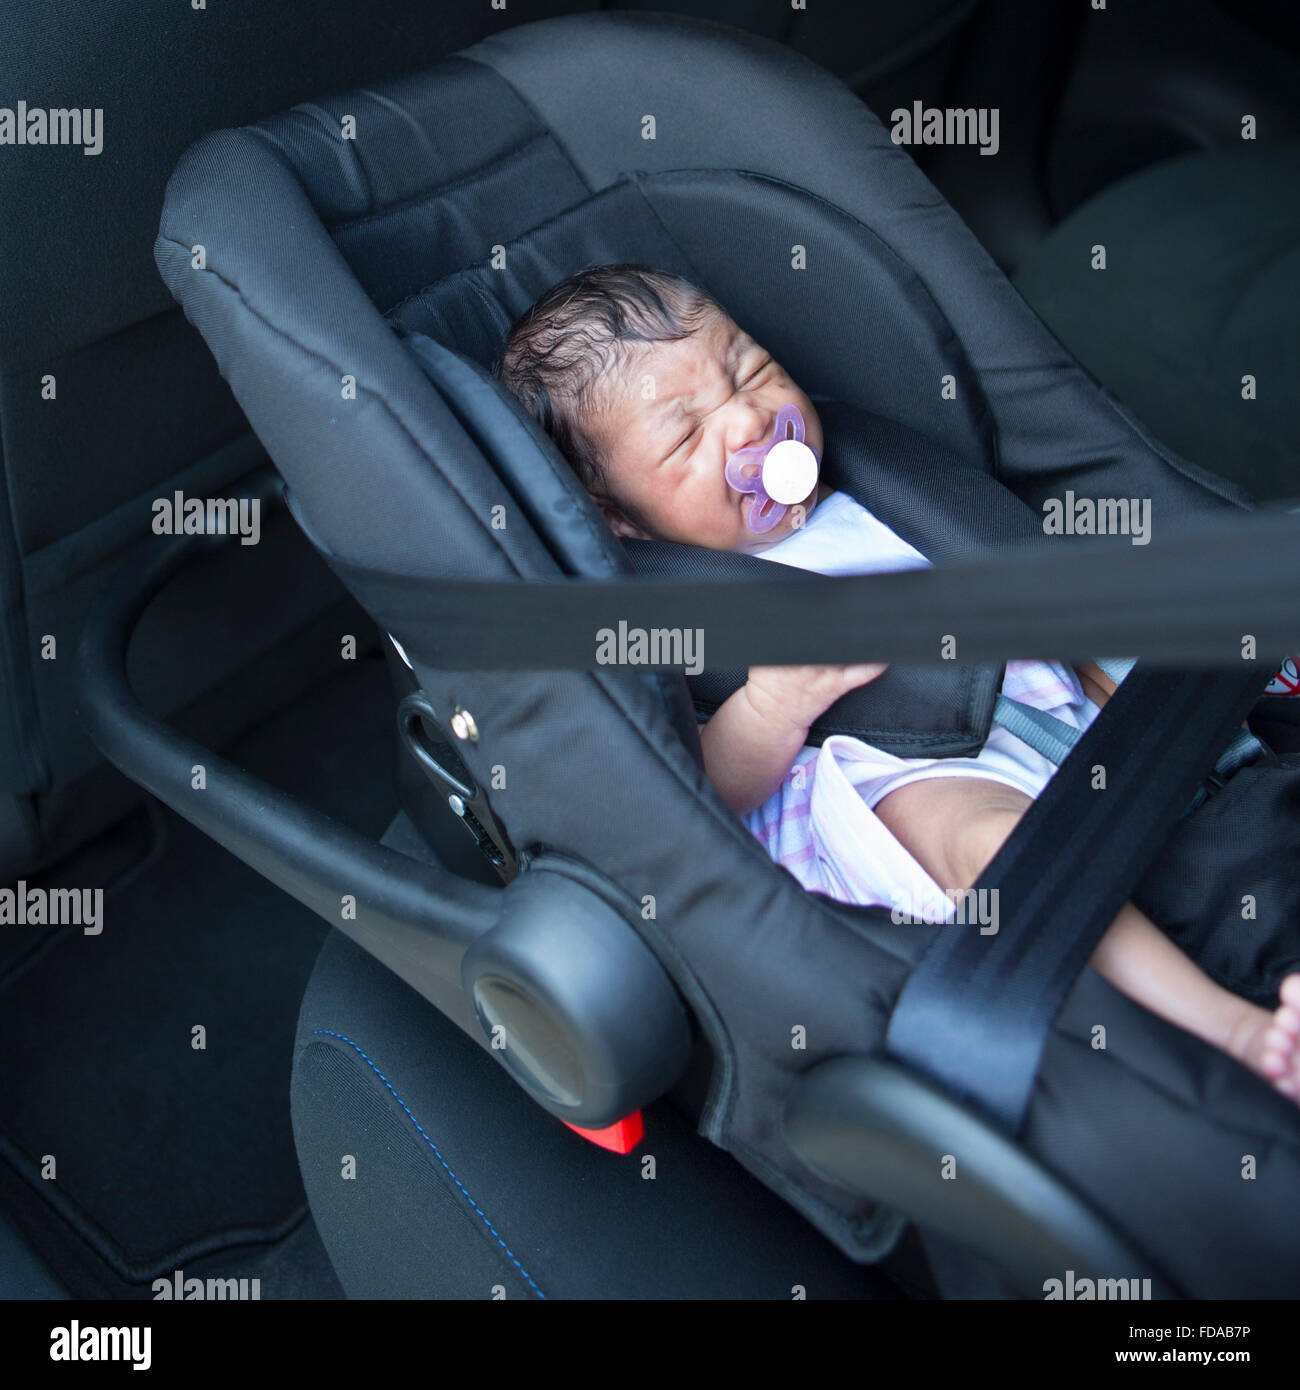 A newborn baby girl in a car seat. Stock Photo